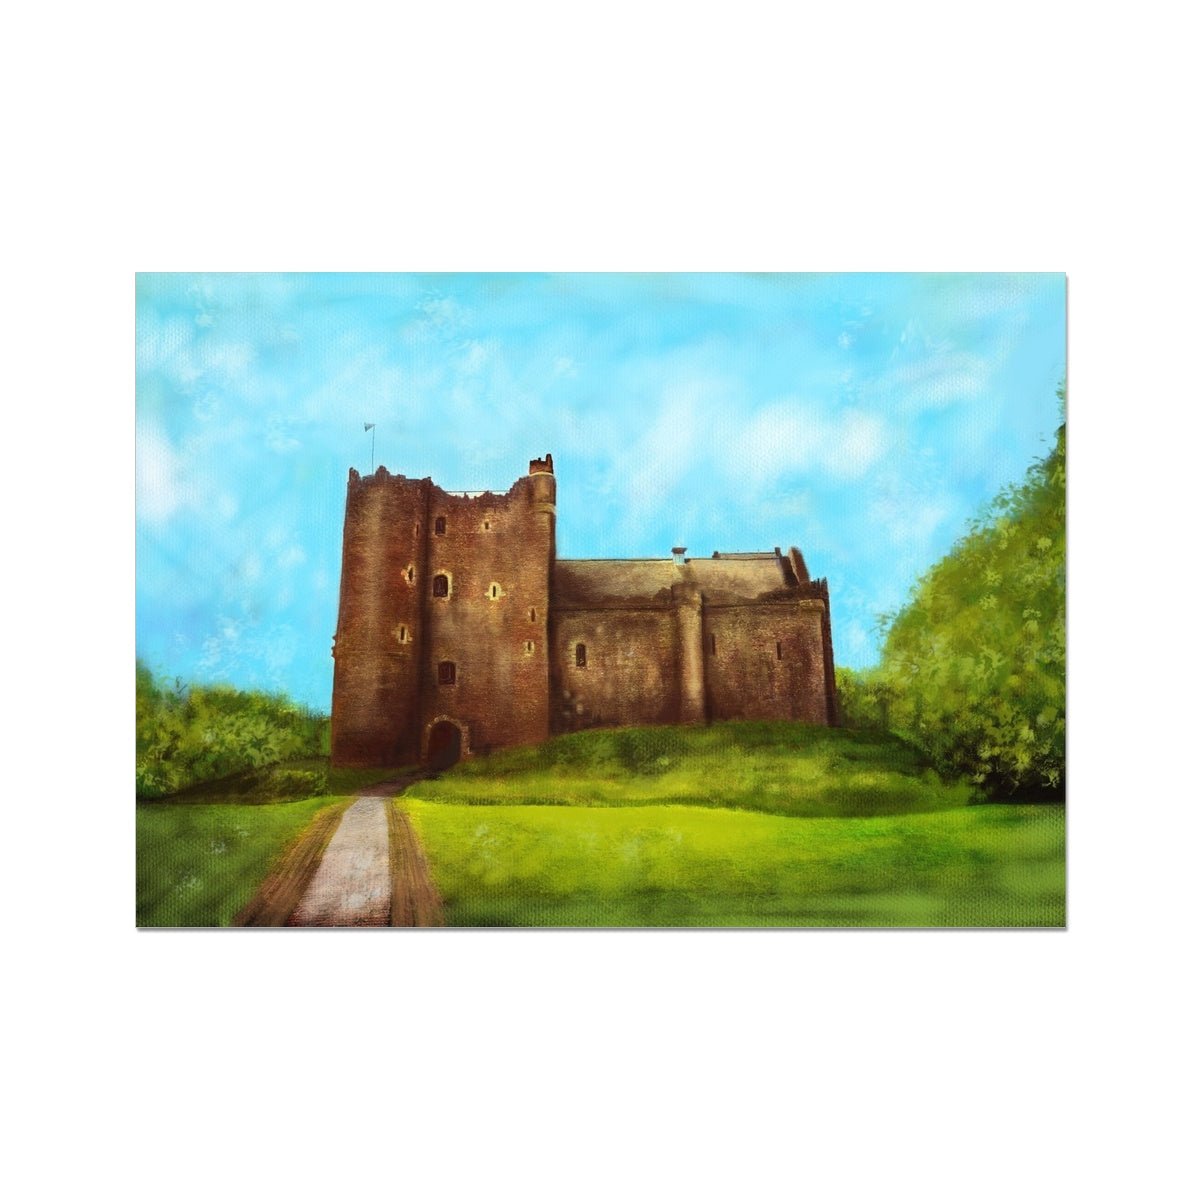 Doune Castle Painting | Fine Art Prints From Scotland-Unframed Prints-Scottish Castles Art Gallery-A2 Landscape-Paintings, Prints, Homeware, Art Gifts From Scotland By Scottish Artist Kevin Hunter